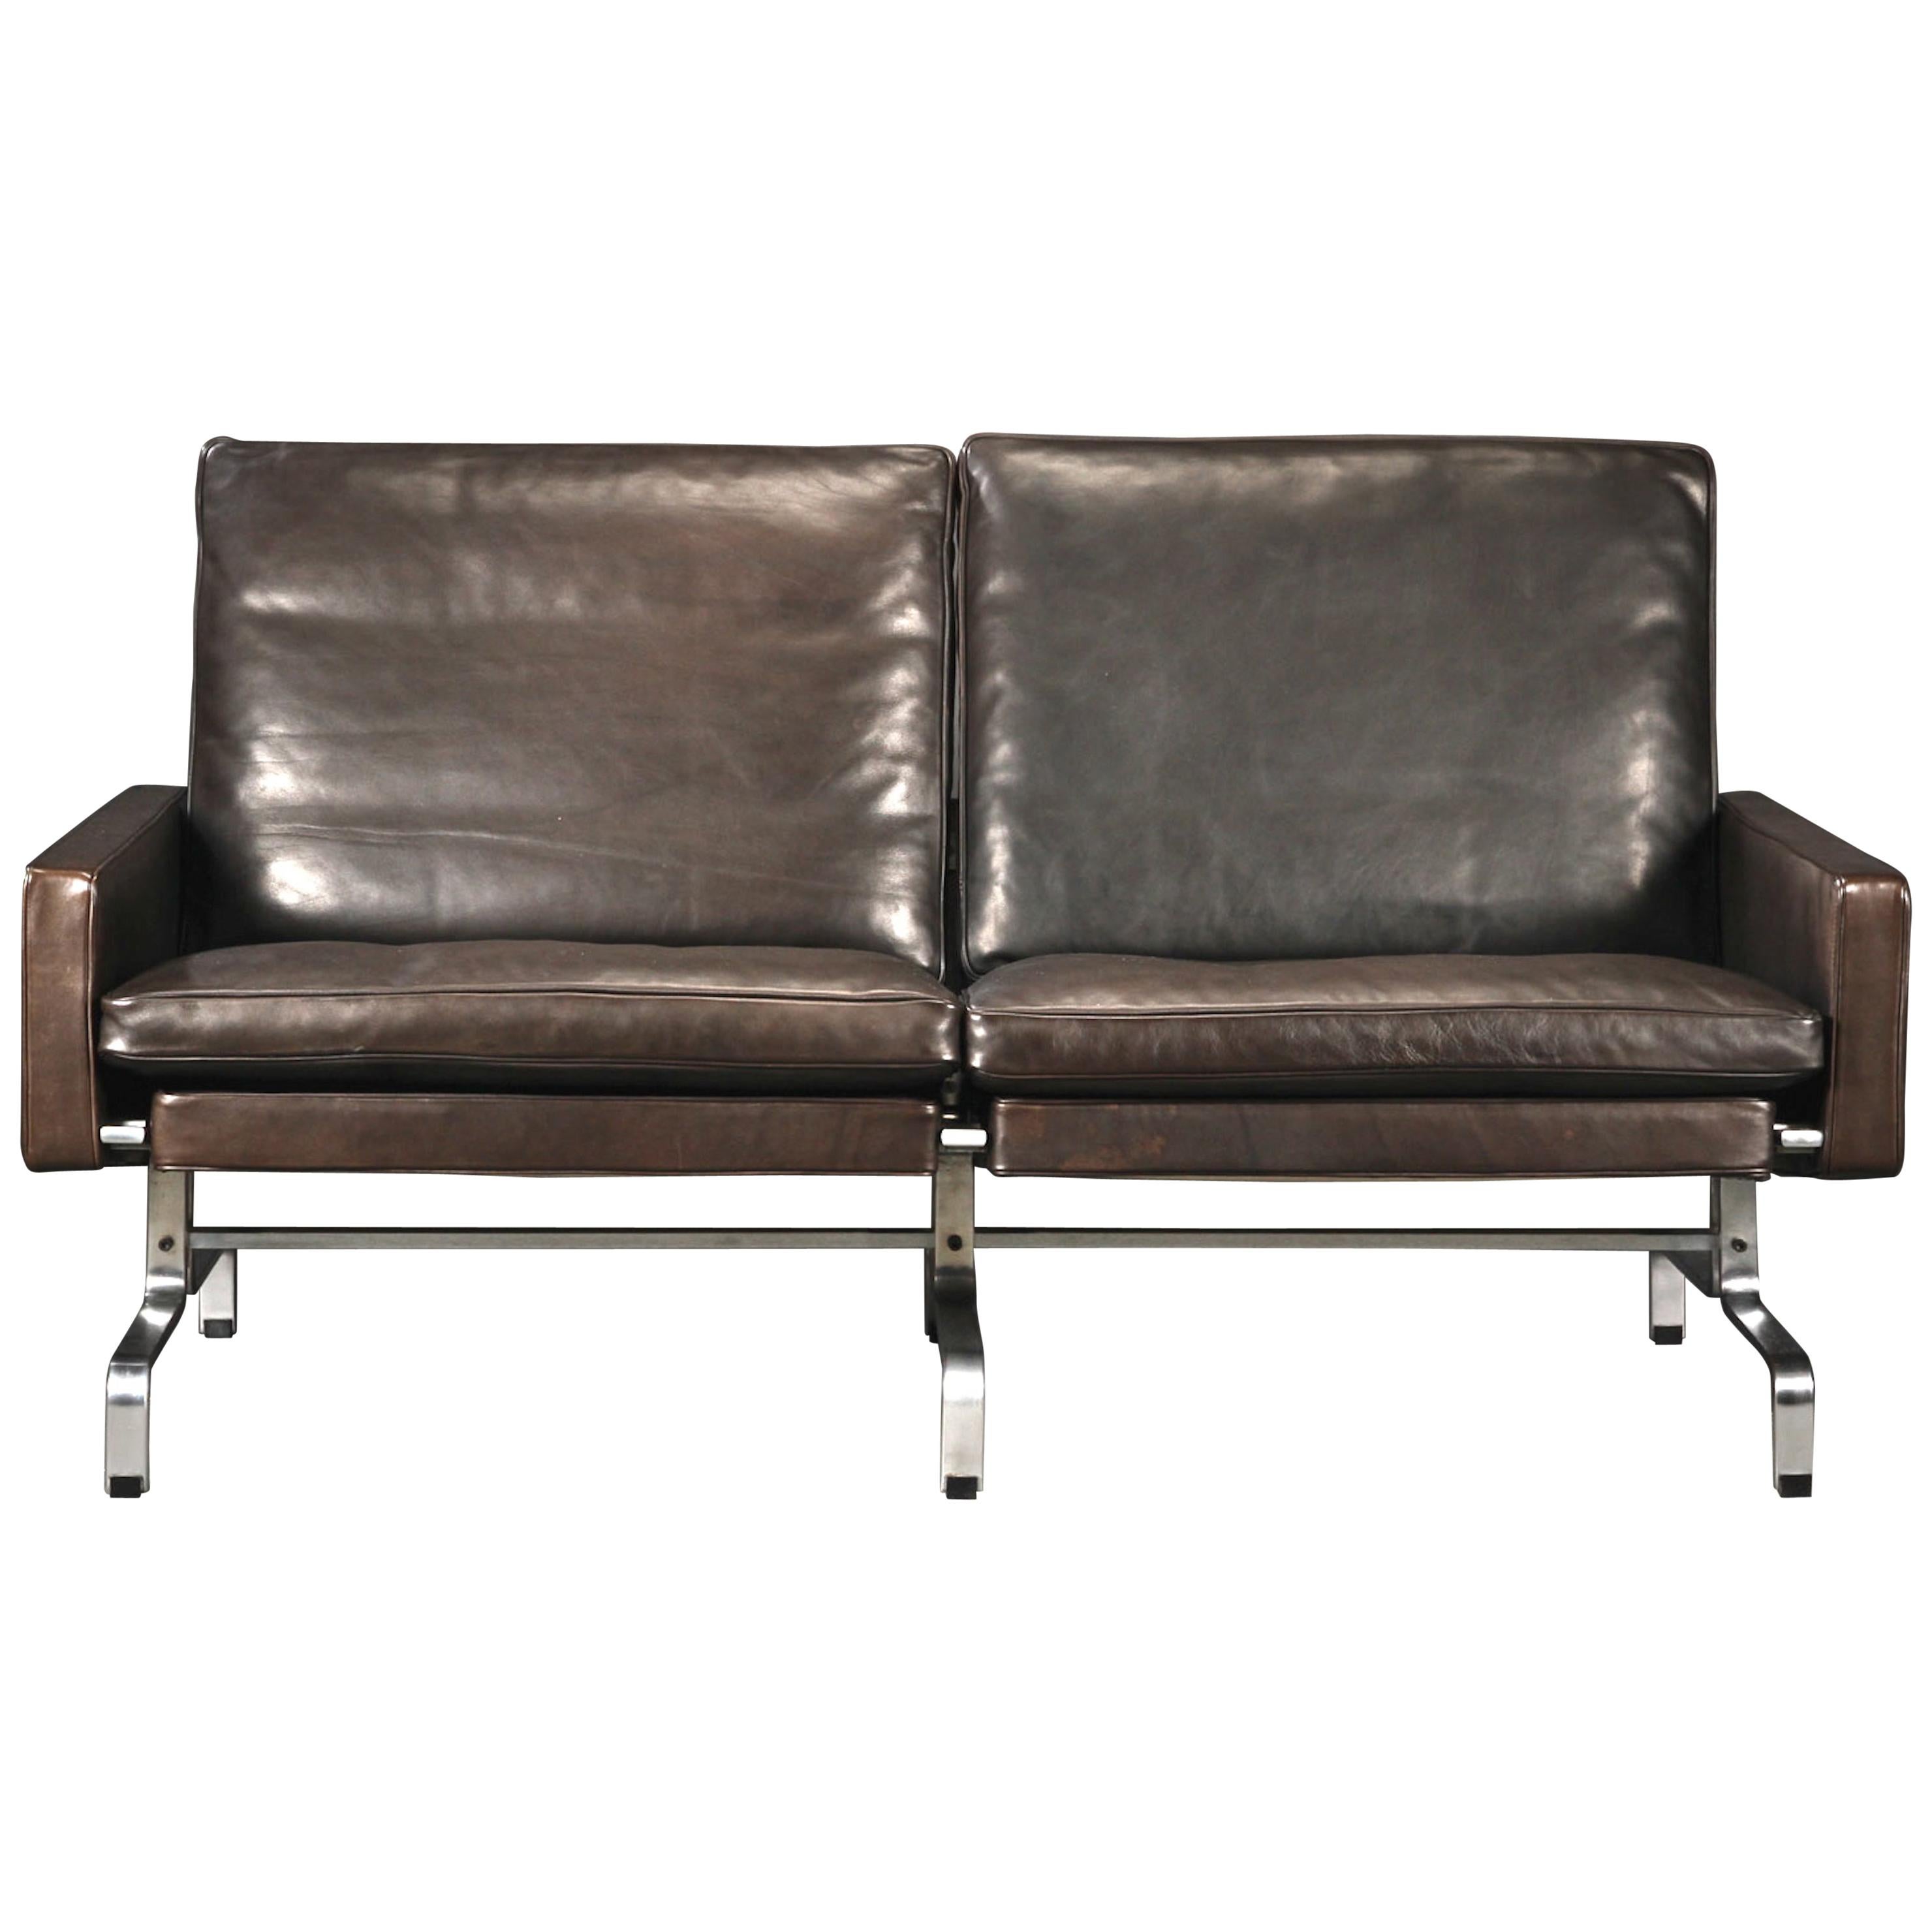 Poul Kjaerholm Two-Seat Black "Elegance" Leather Sofa for E.Kold Christensen